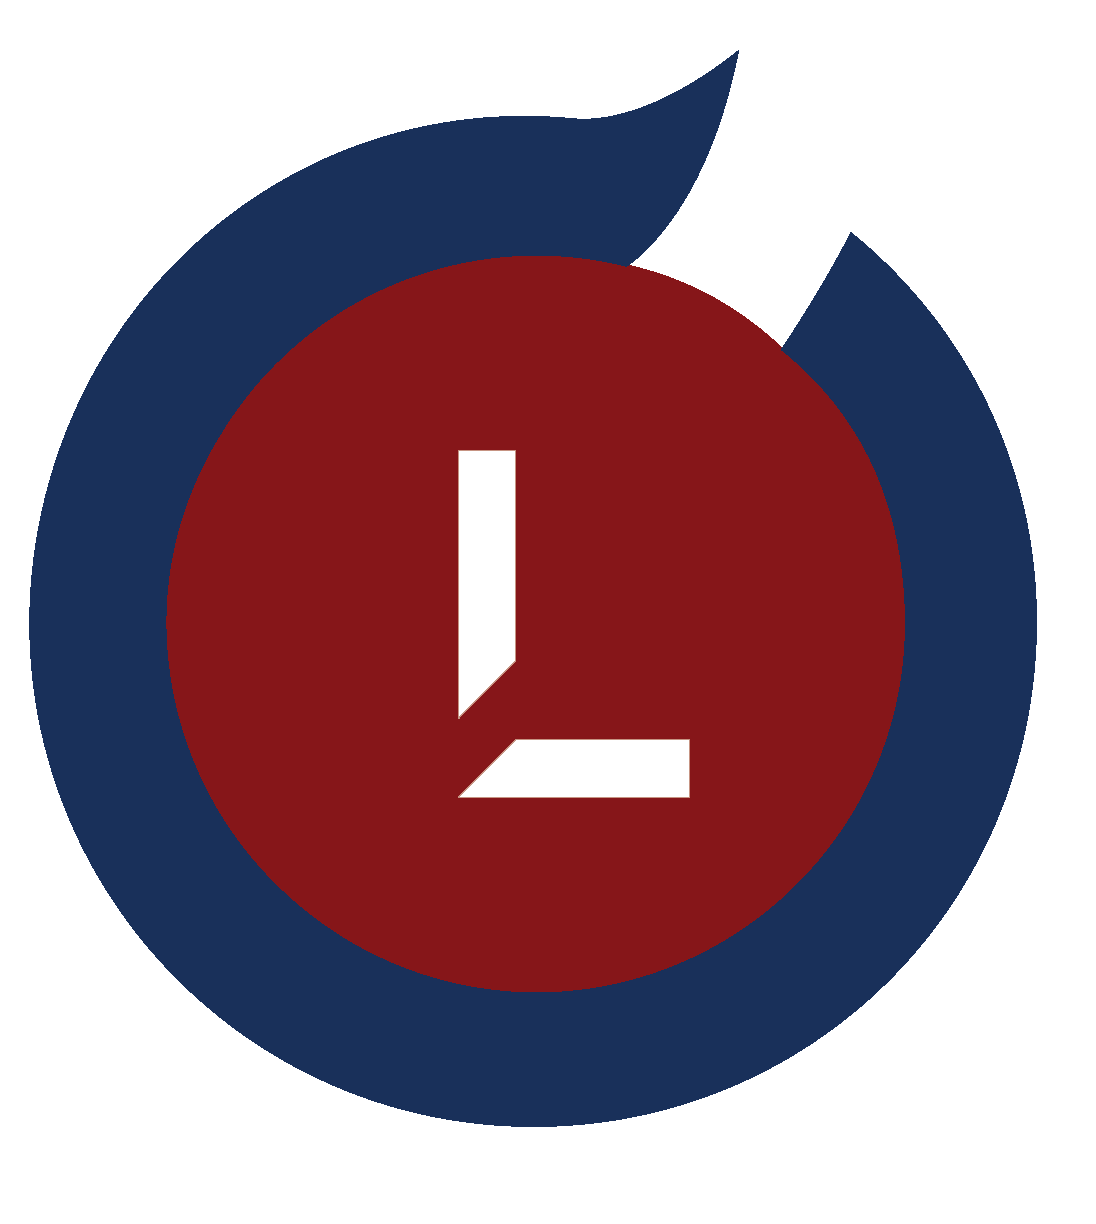 L is for Lincoln Logo Sahuarita Arizona